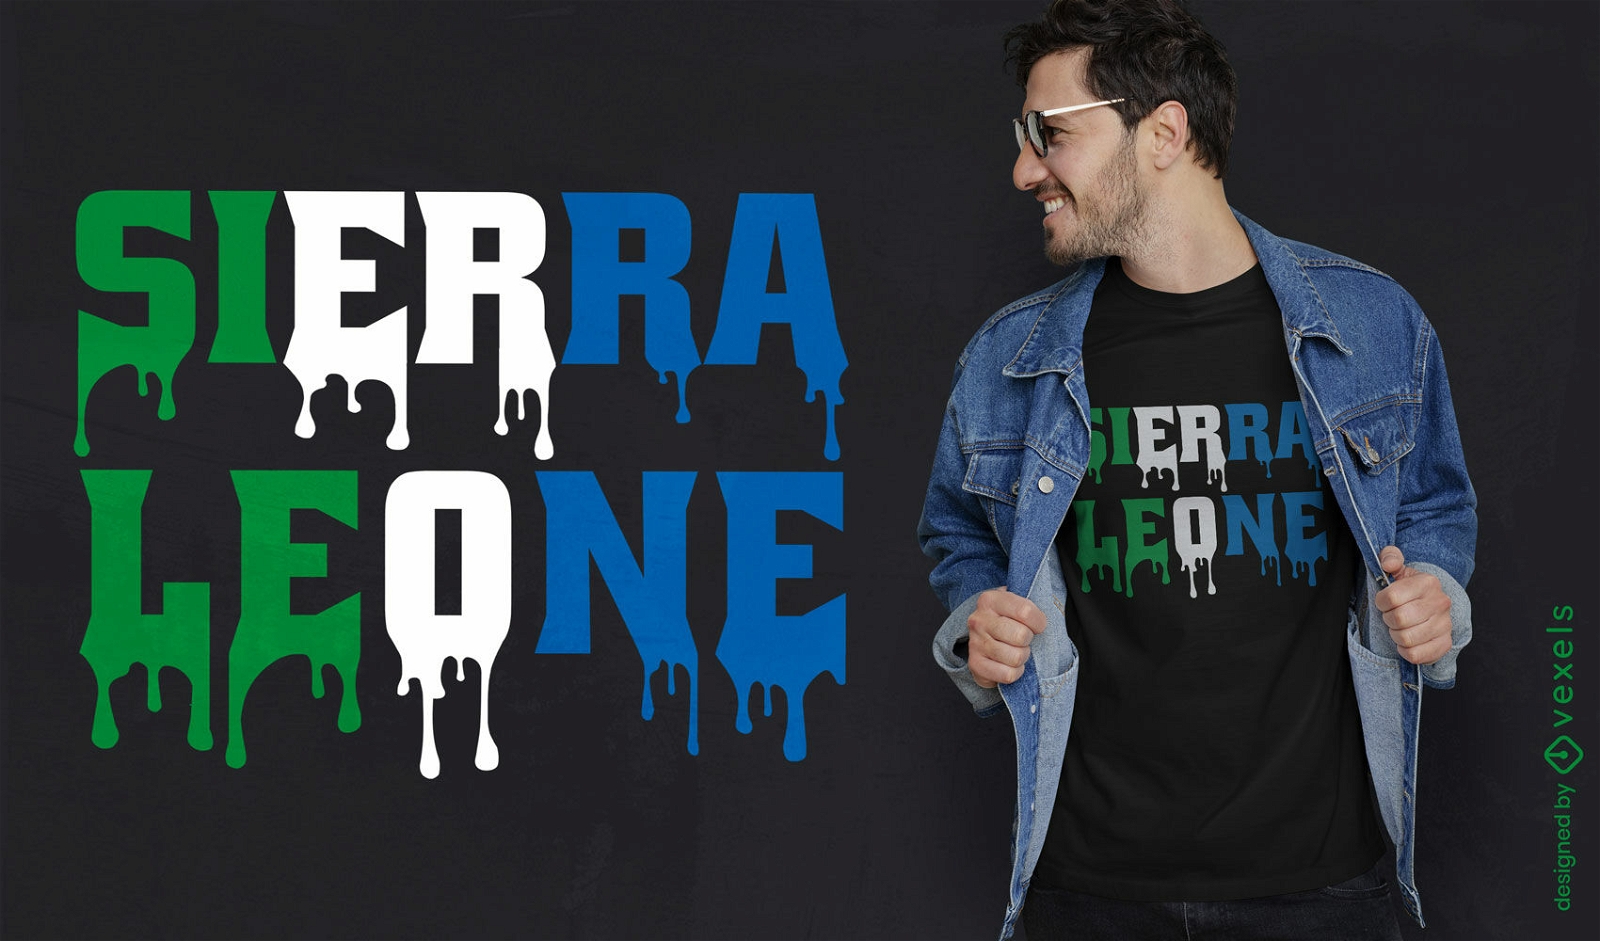 Sierra Leone t-shirt design